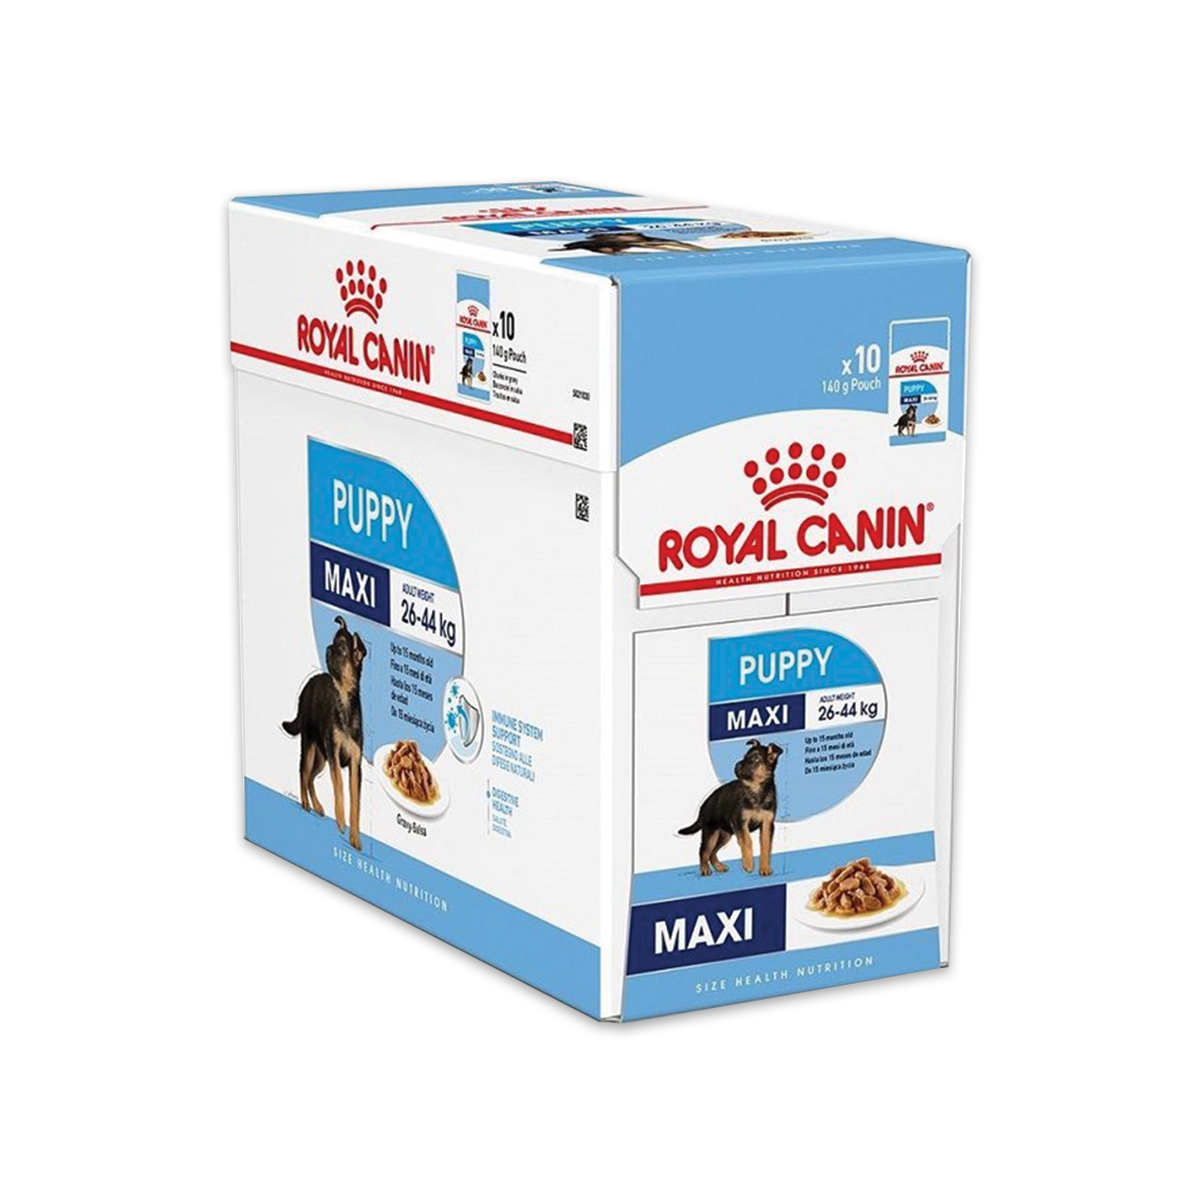 Royal Canin Pouch SHW Maxi Puppy  โรยัล คานิน อาหารชนิดเม็ดสำหรับลูกสุนัขพันธุ์ใหญ่อายุ 2 ถึง 15 เดือน ขนาด 140 กรัม (10 ซอง)